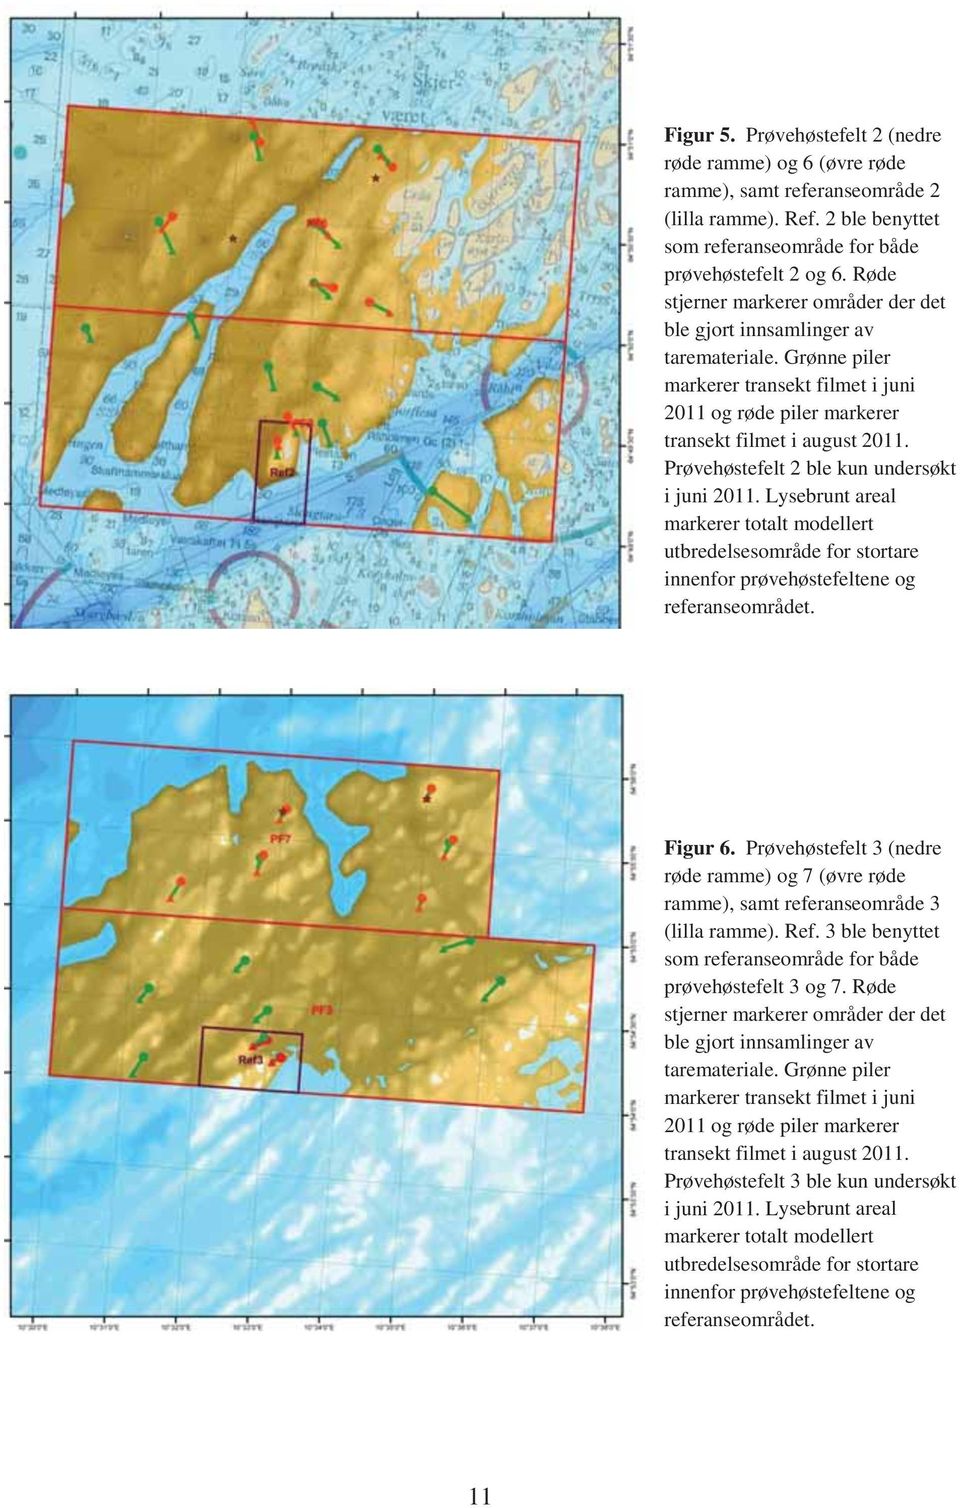 Prøvehøstefelt 2 ble kun undersøkt i juni 2011. Lysebrunt areal markerer totalt modellert utbredelsesområde for stortare innenfor prøvehøstefeltene og referanseområdet. Figur 6.